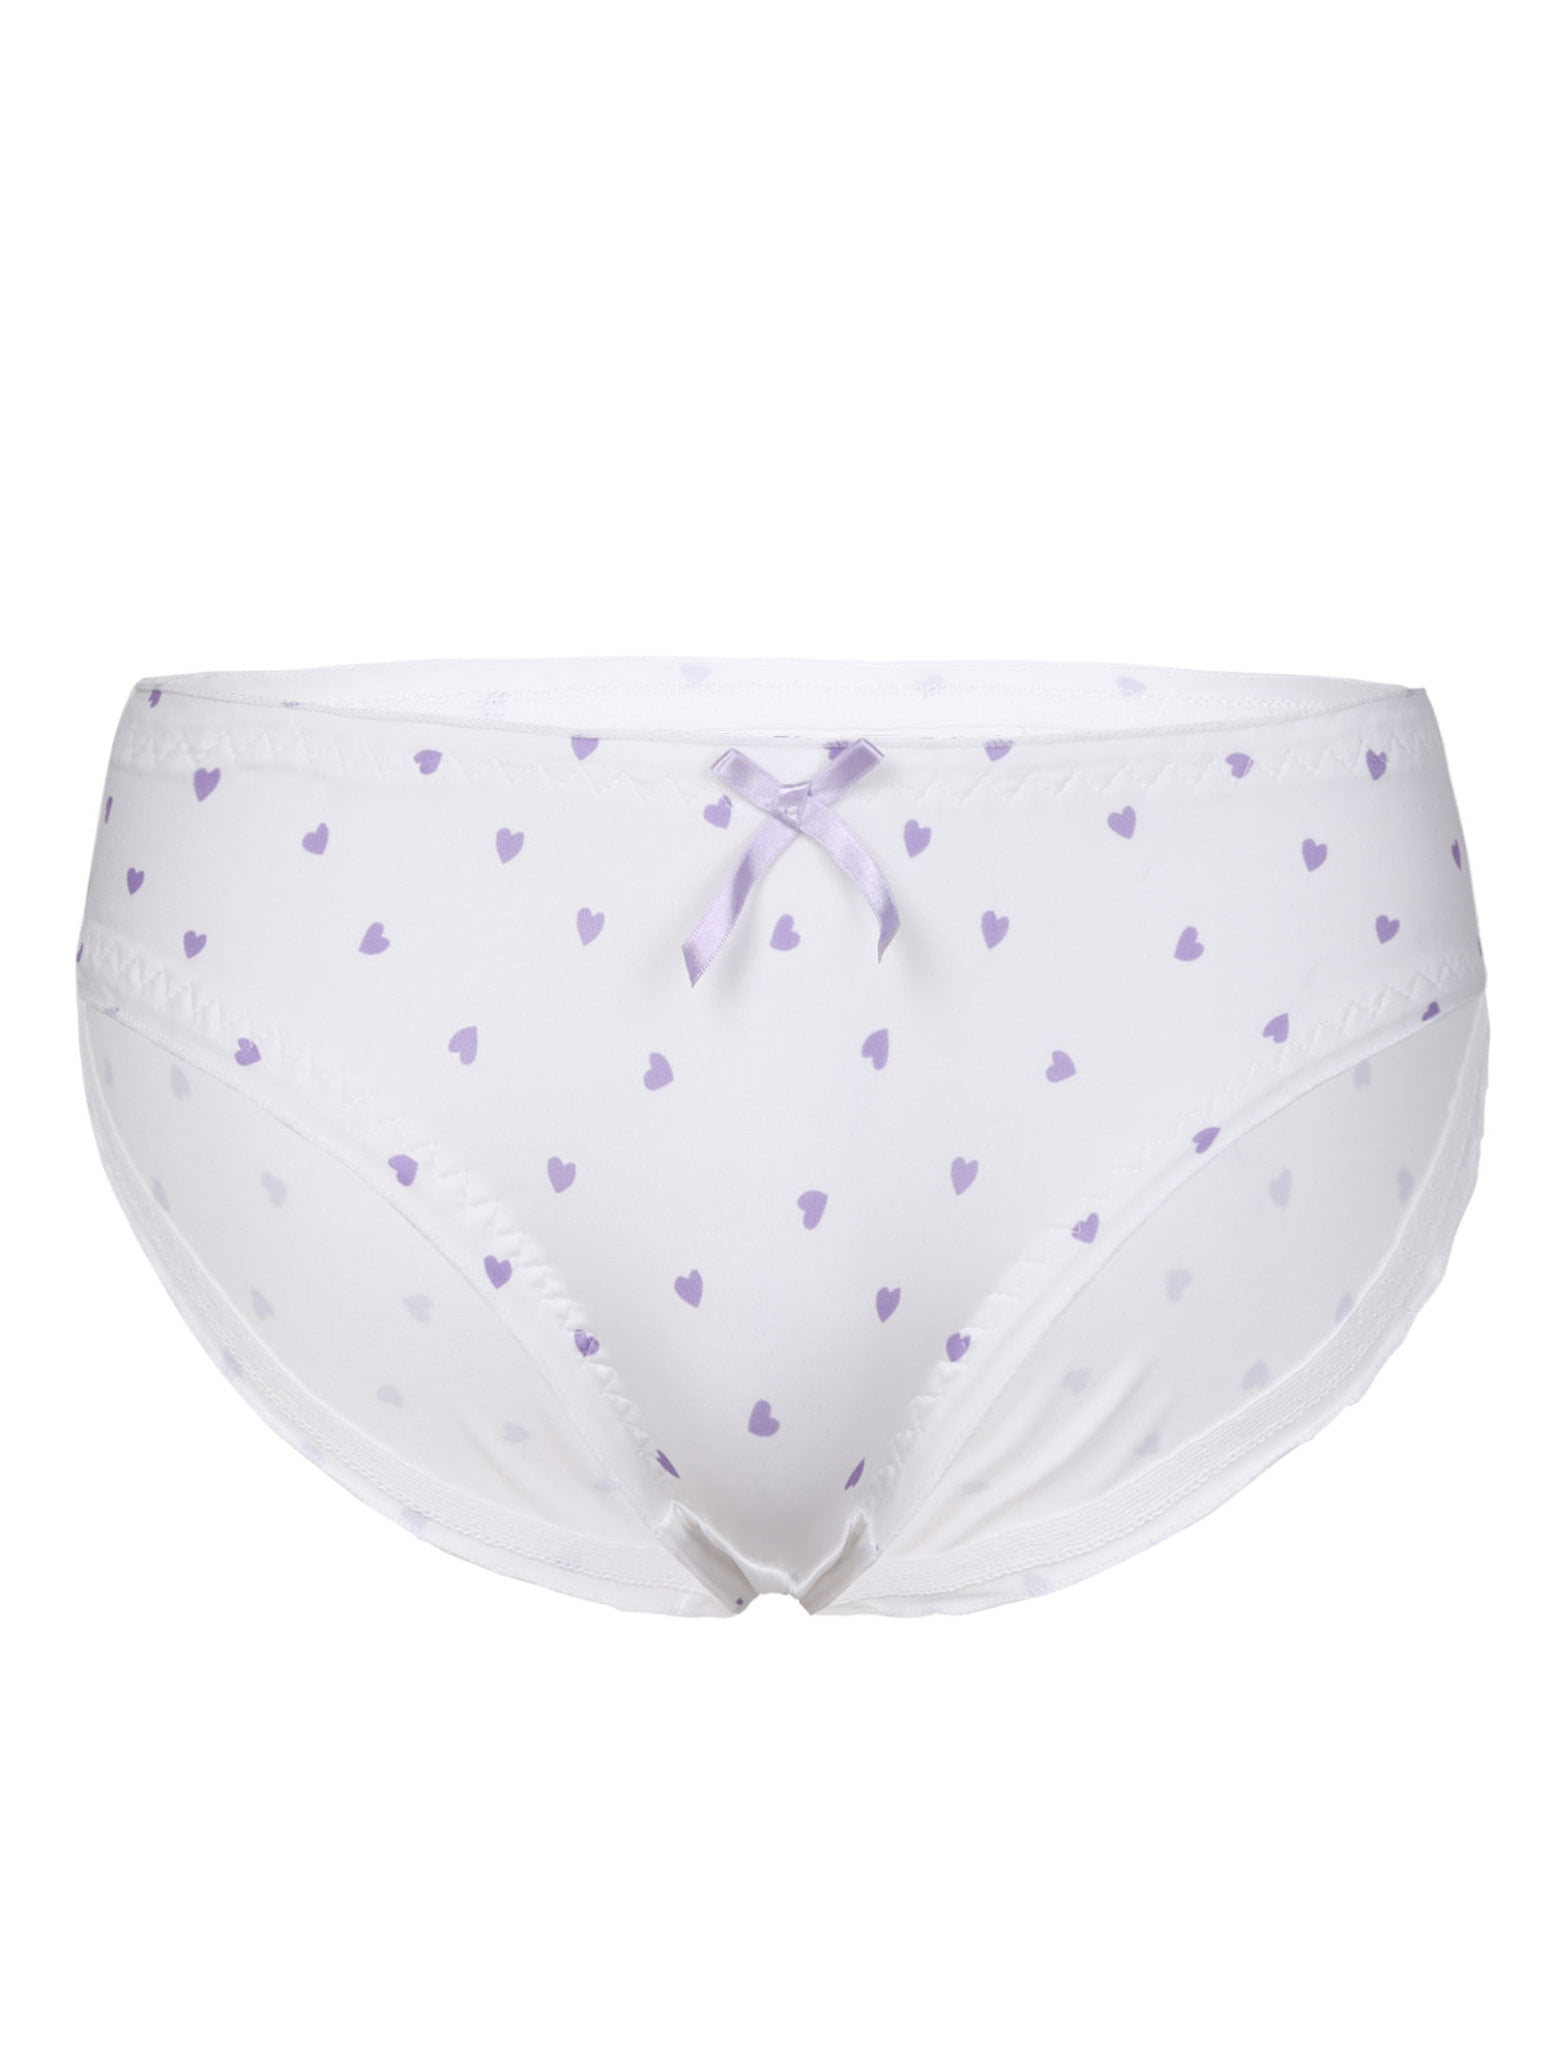 Ruffle Lingerie Bow Knot Girls Underwear Women's Panties Briefs Love Heart